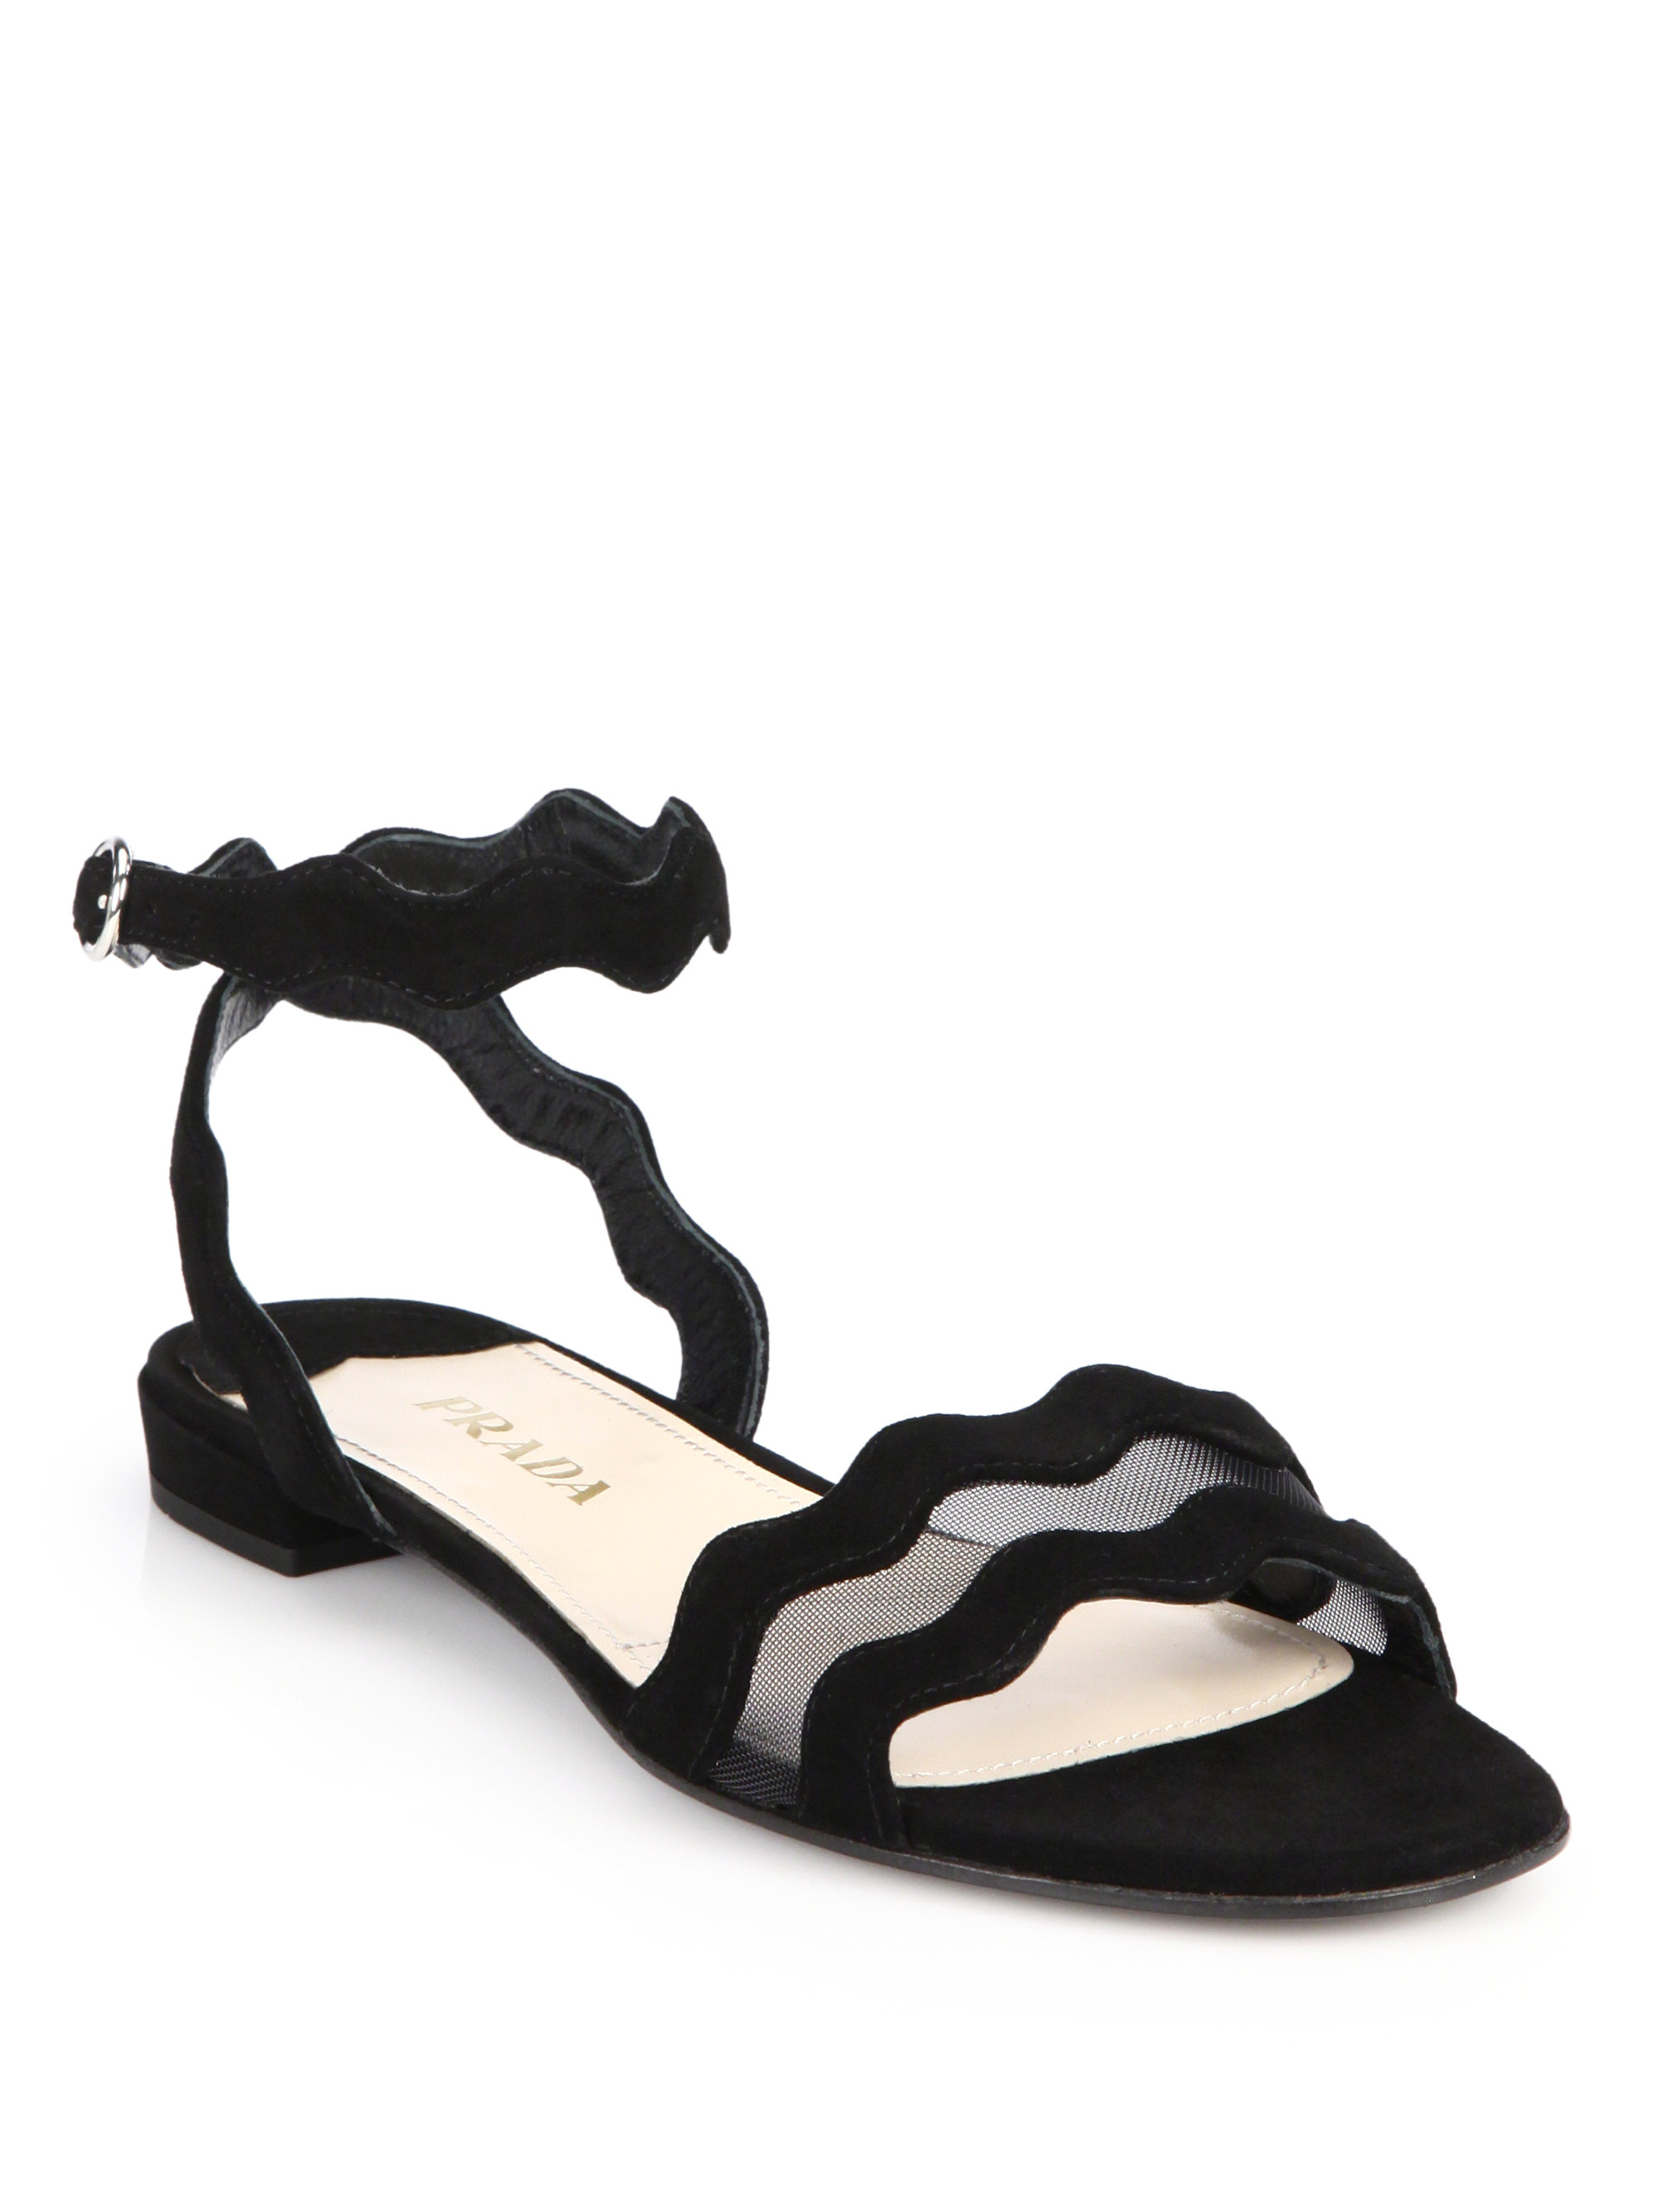 Prada Mesh & Suede Scalloped Sandals in Black | Lyst